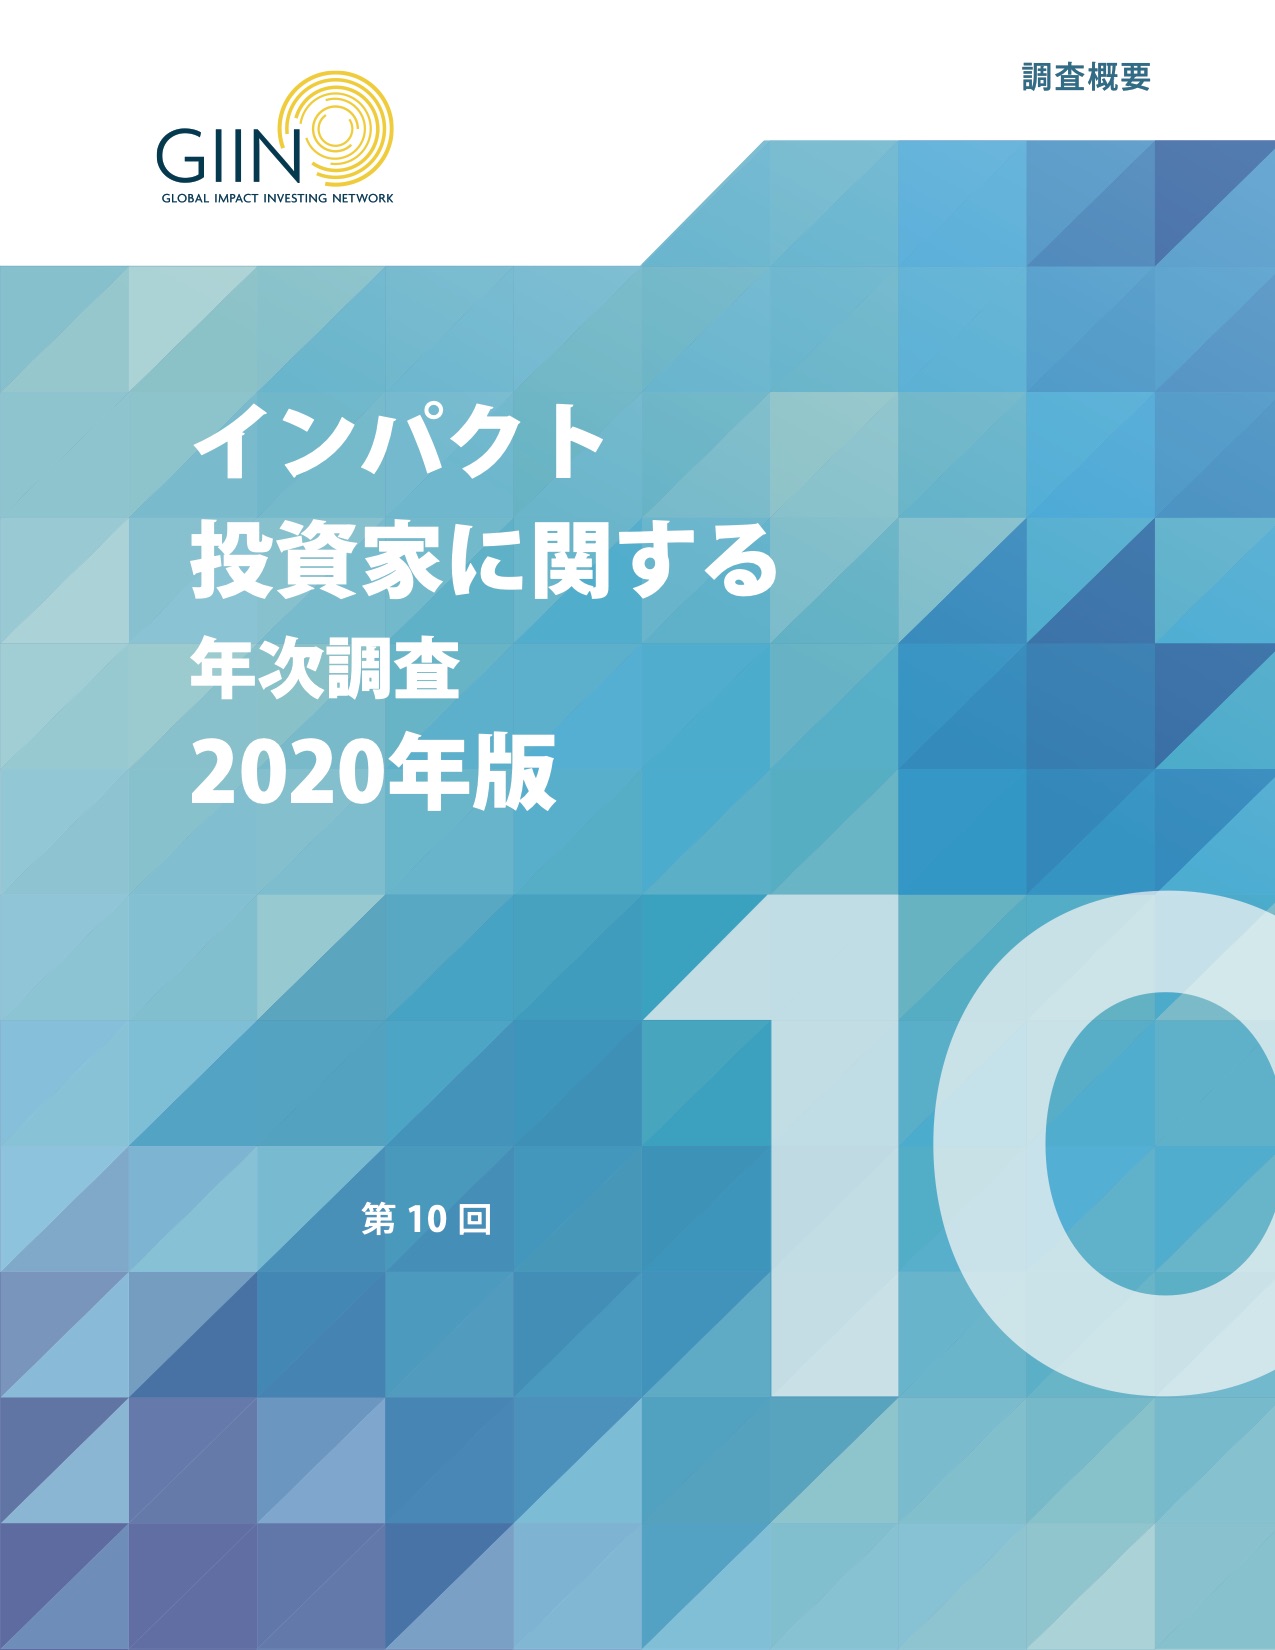 The GIIN発行「インパクト投資家に関する年次報告書2020（調査概要）」